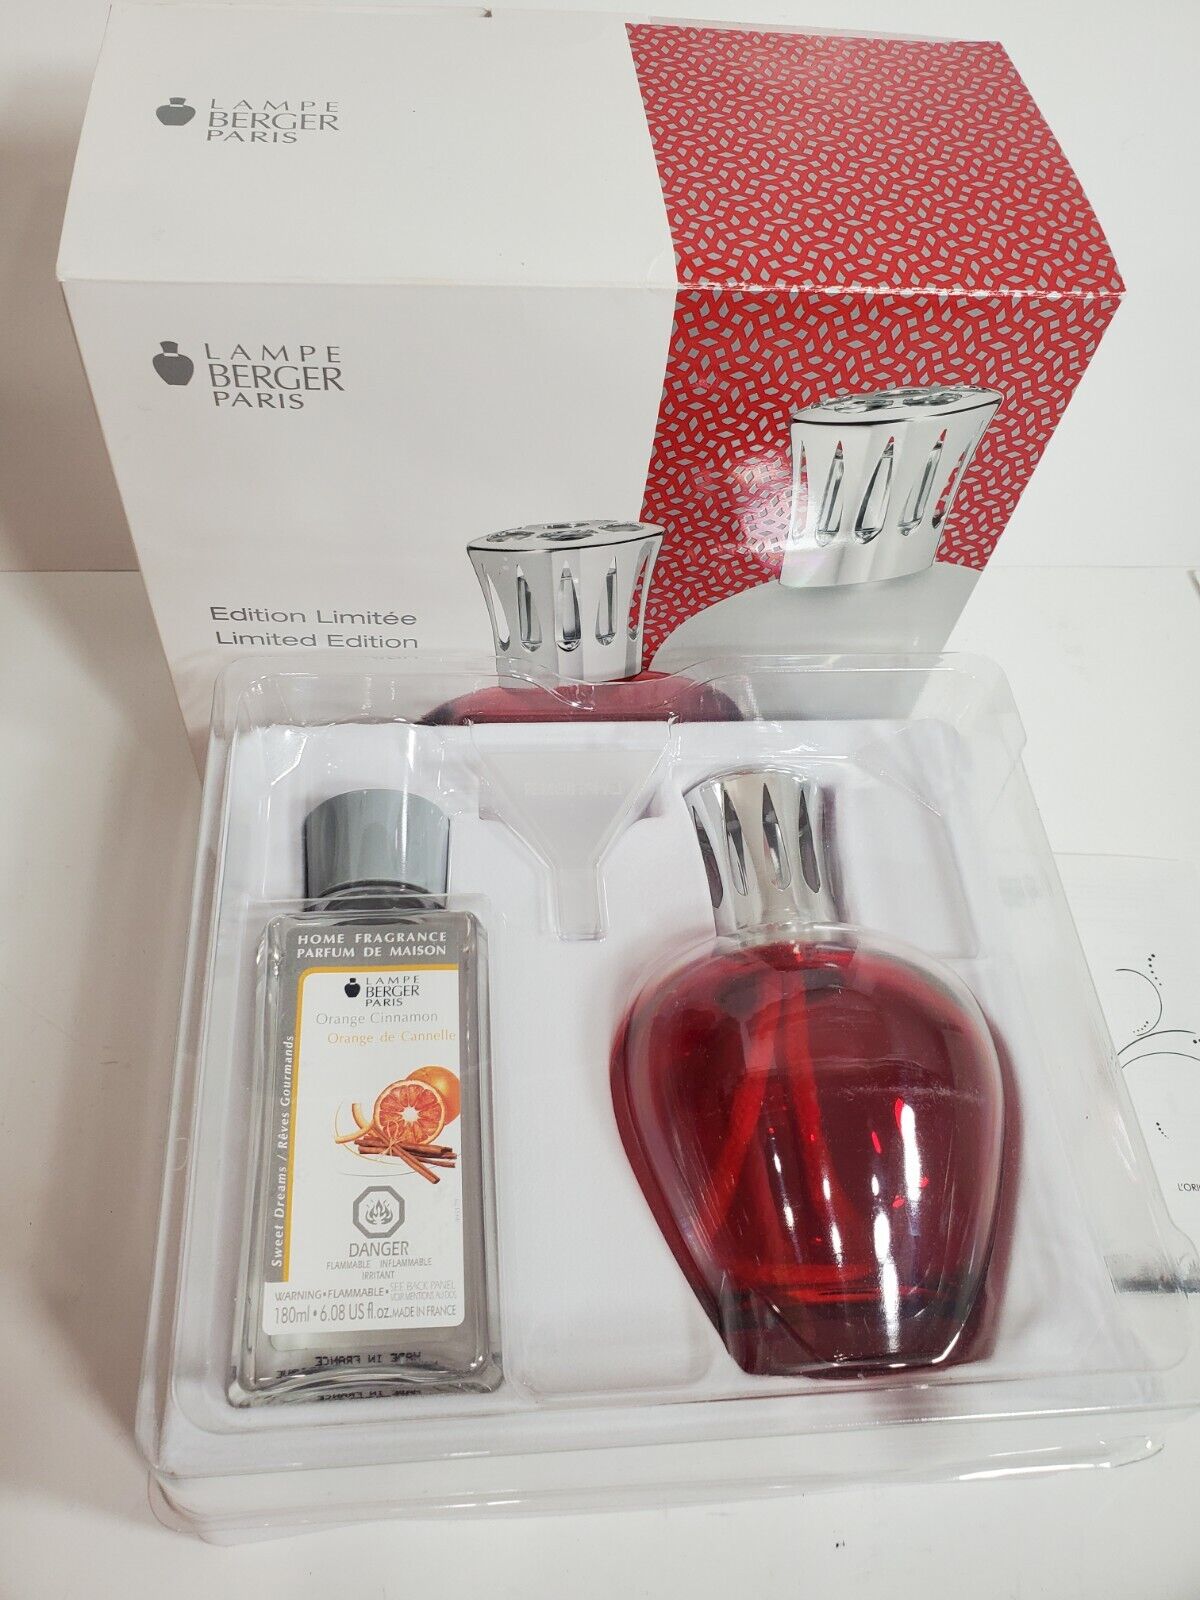 grip Aannemer leerling LAMPE BERGER PARIS Limited Edition Parfume fragrance l'Original Depuis 1898  New | eBay